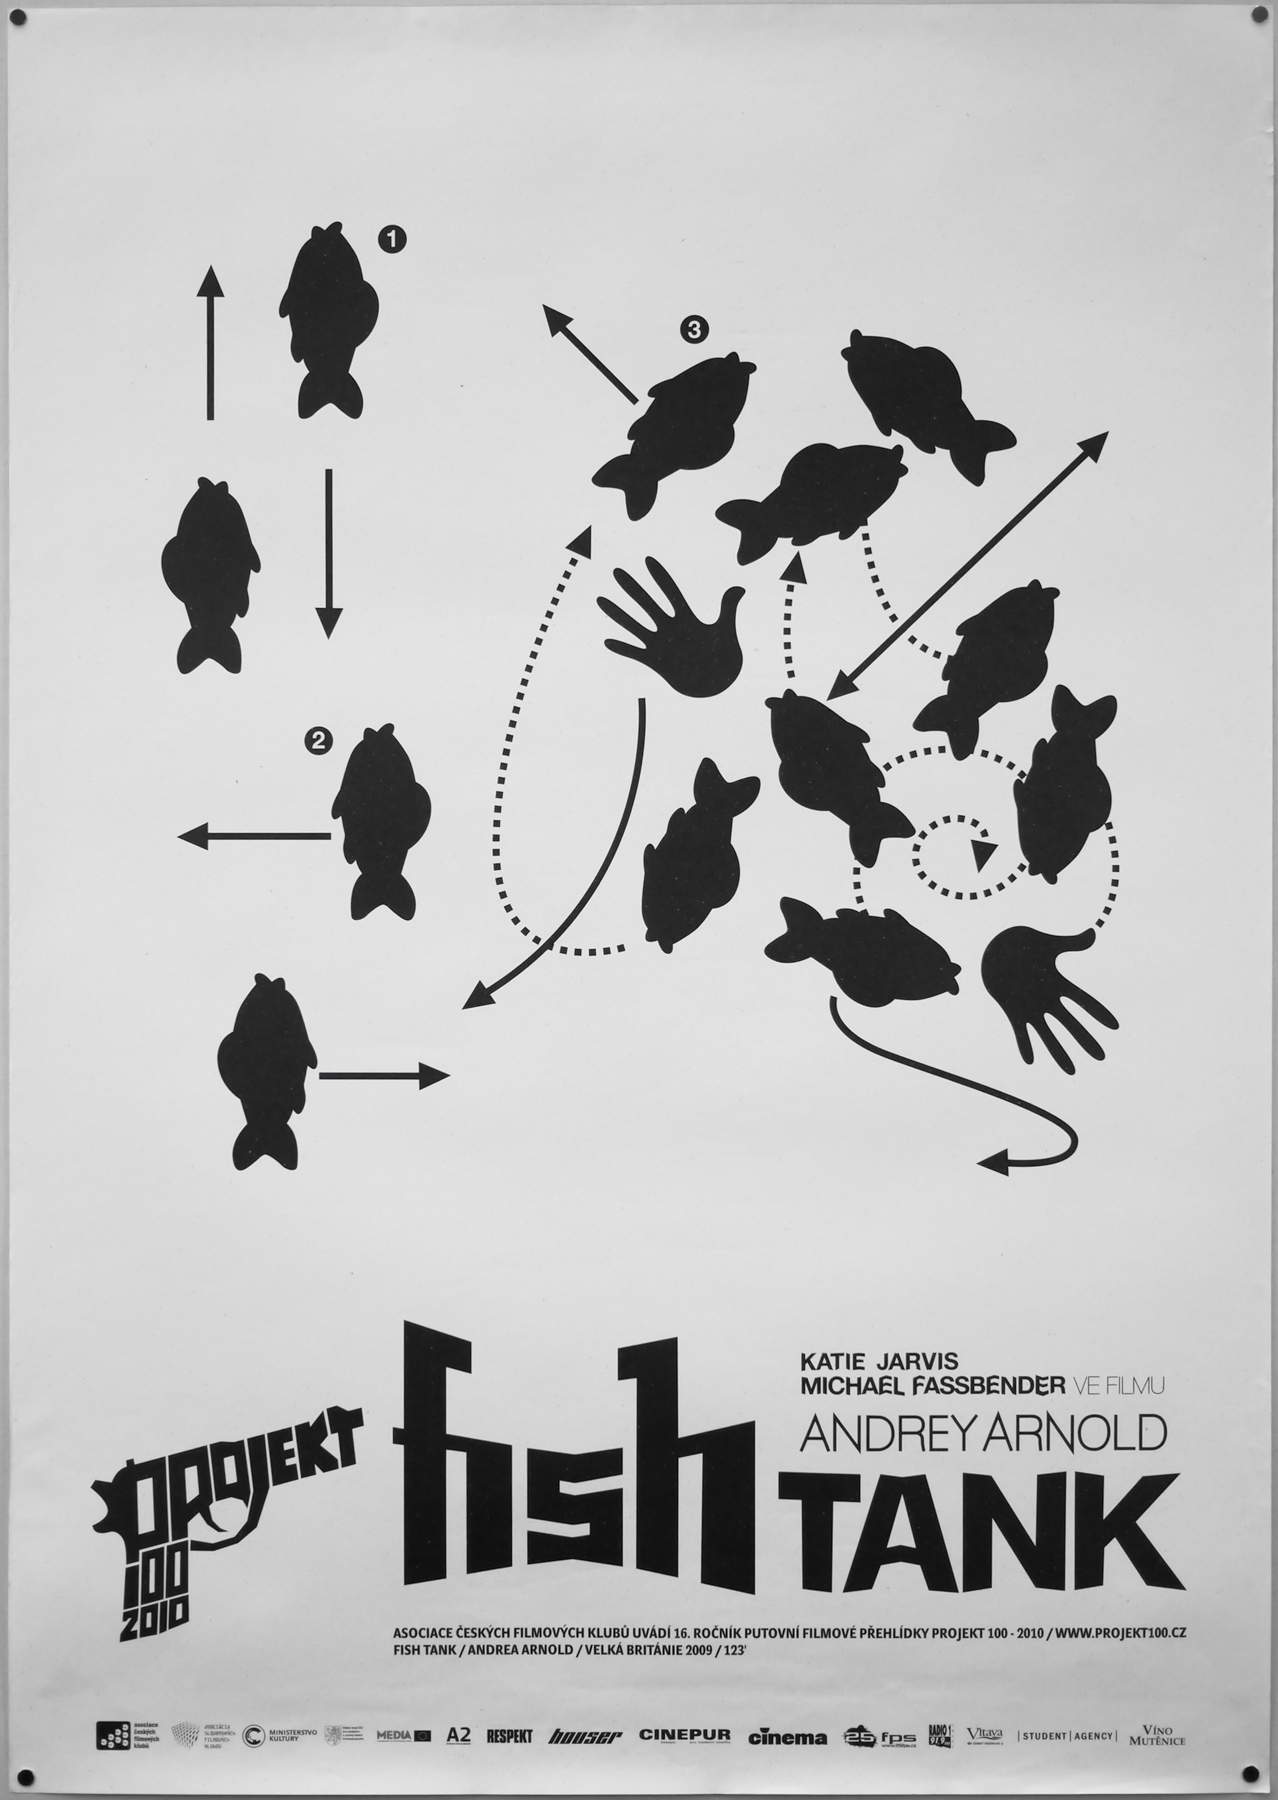 Fish Tank / A1 / Czechoslovakia